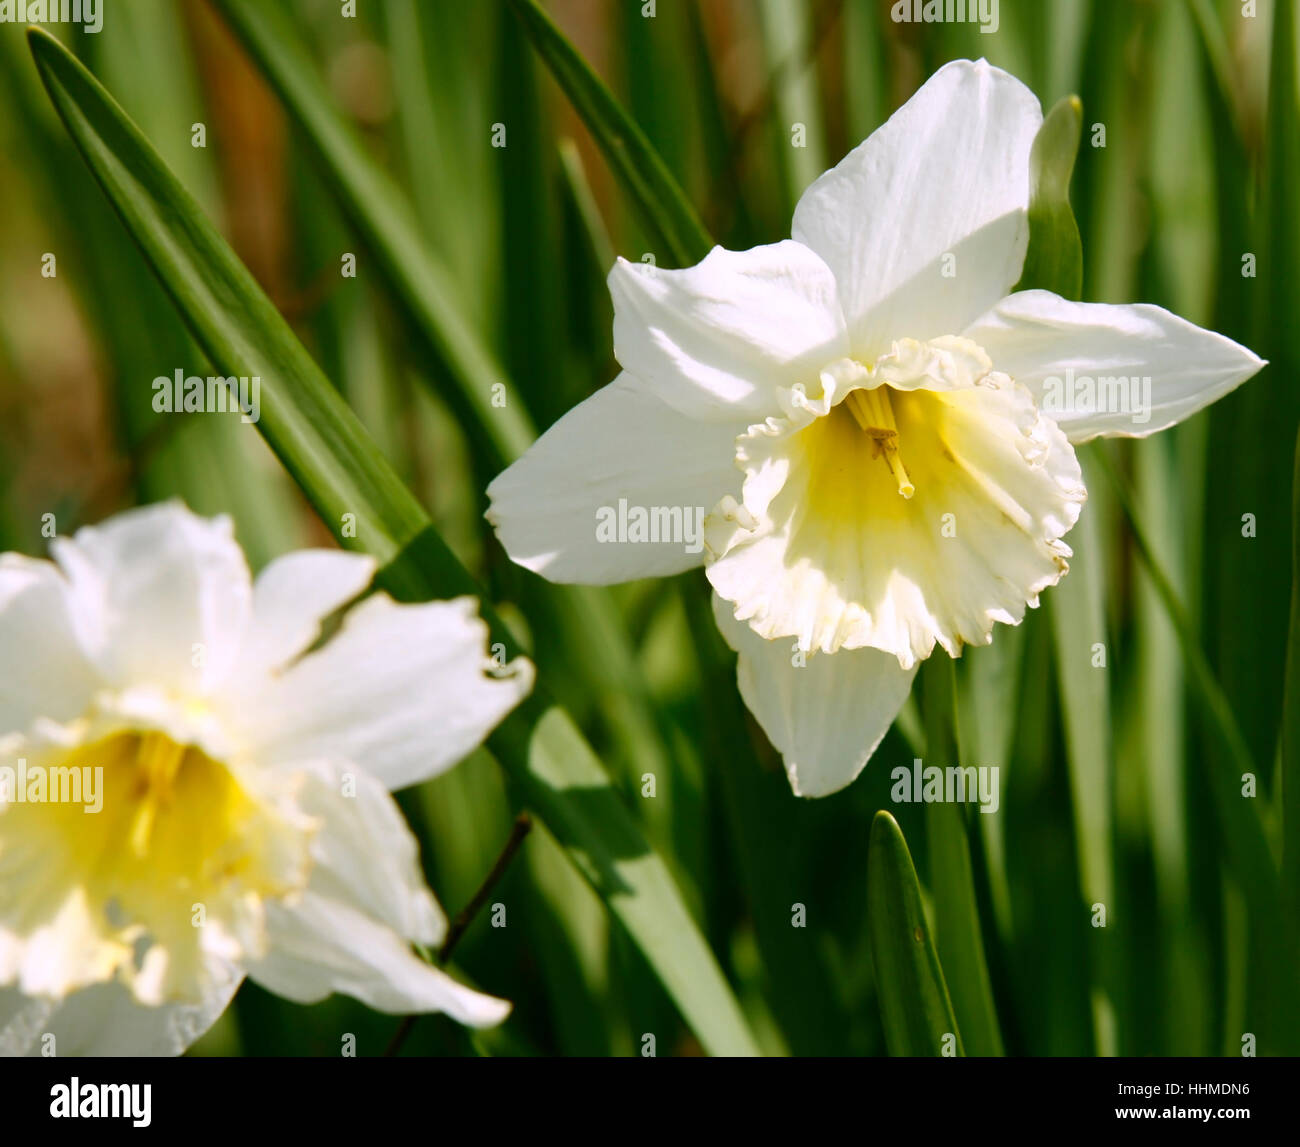 bloom, blossom, flourish, flourishing, lily, blank, european, caucasian, Stock Photo